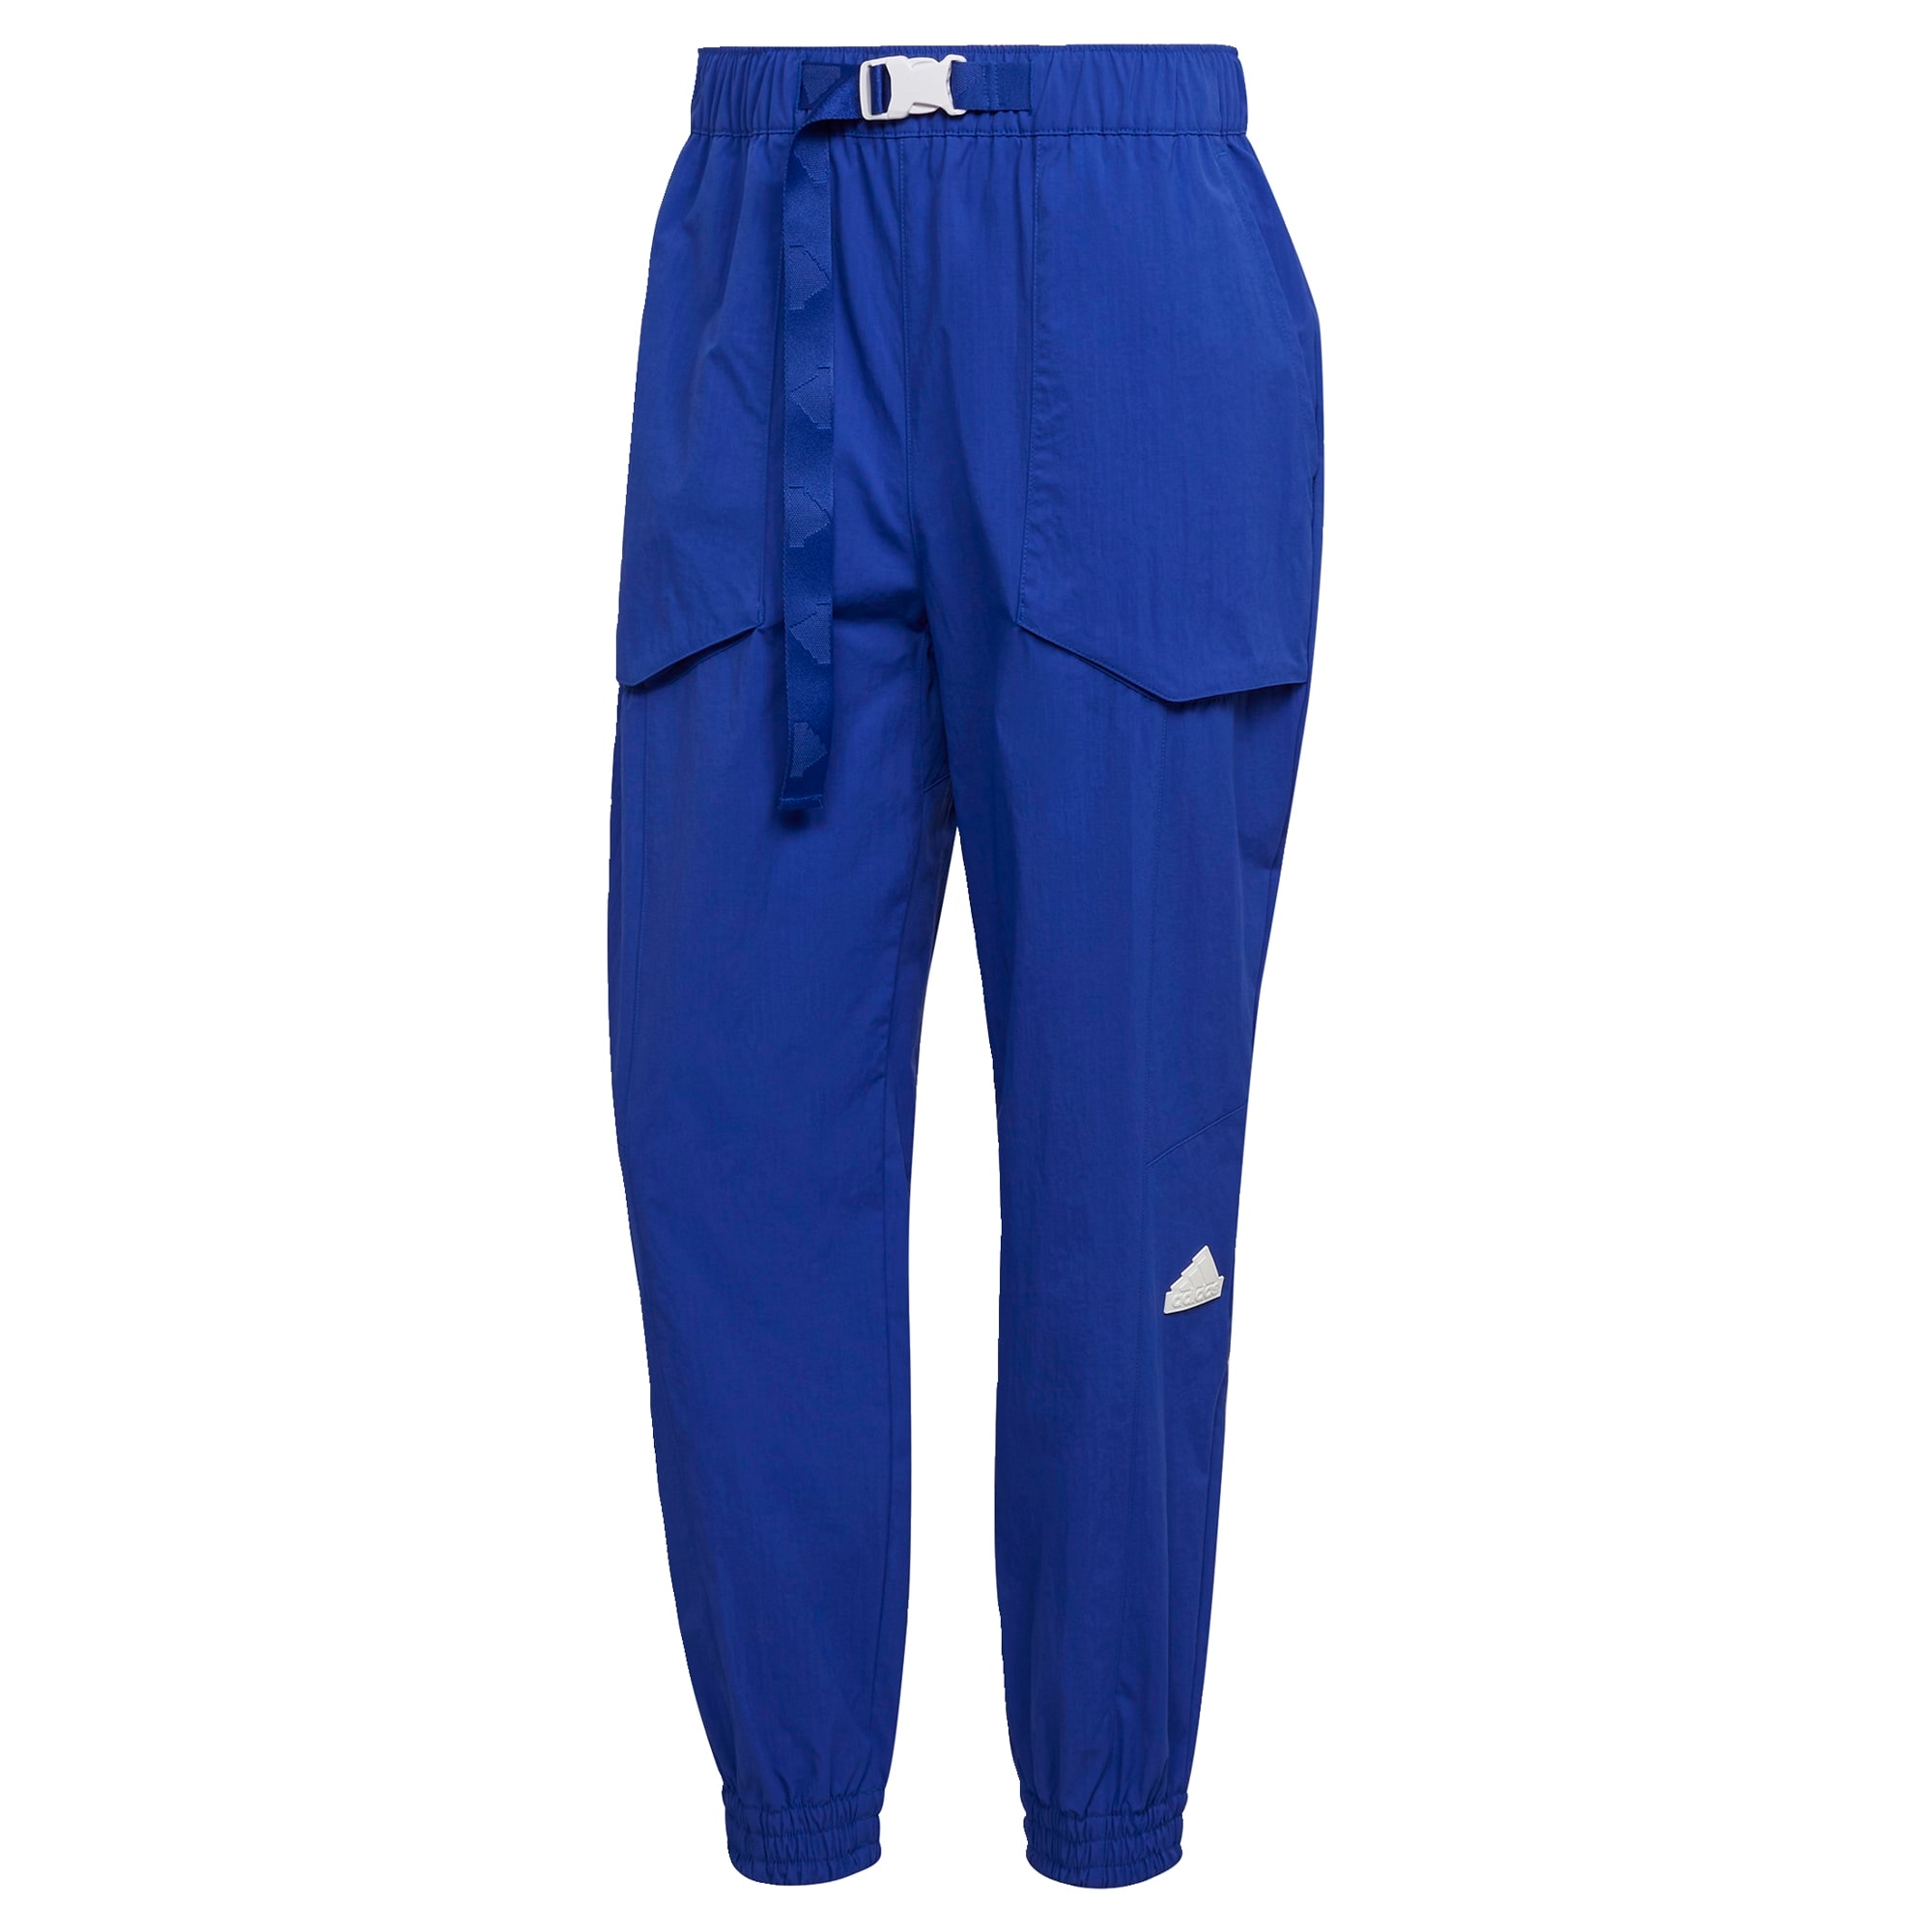 ADIDAS SPORTSWEAR Športne hlače  temno modra / bela